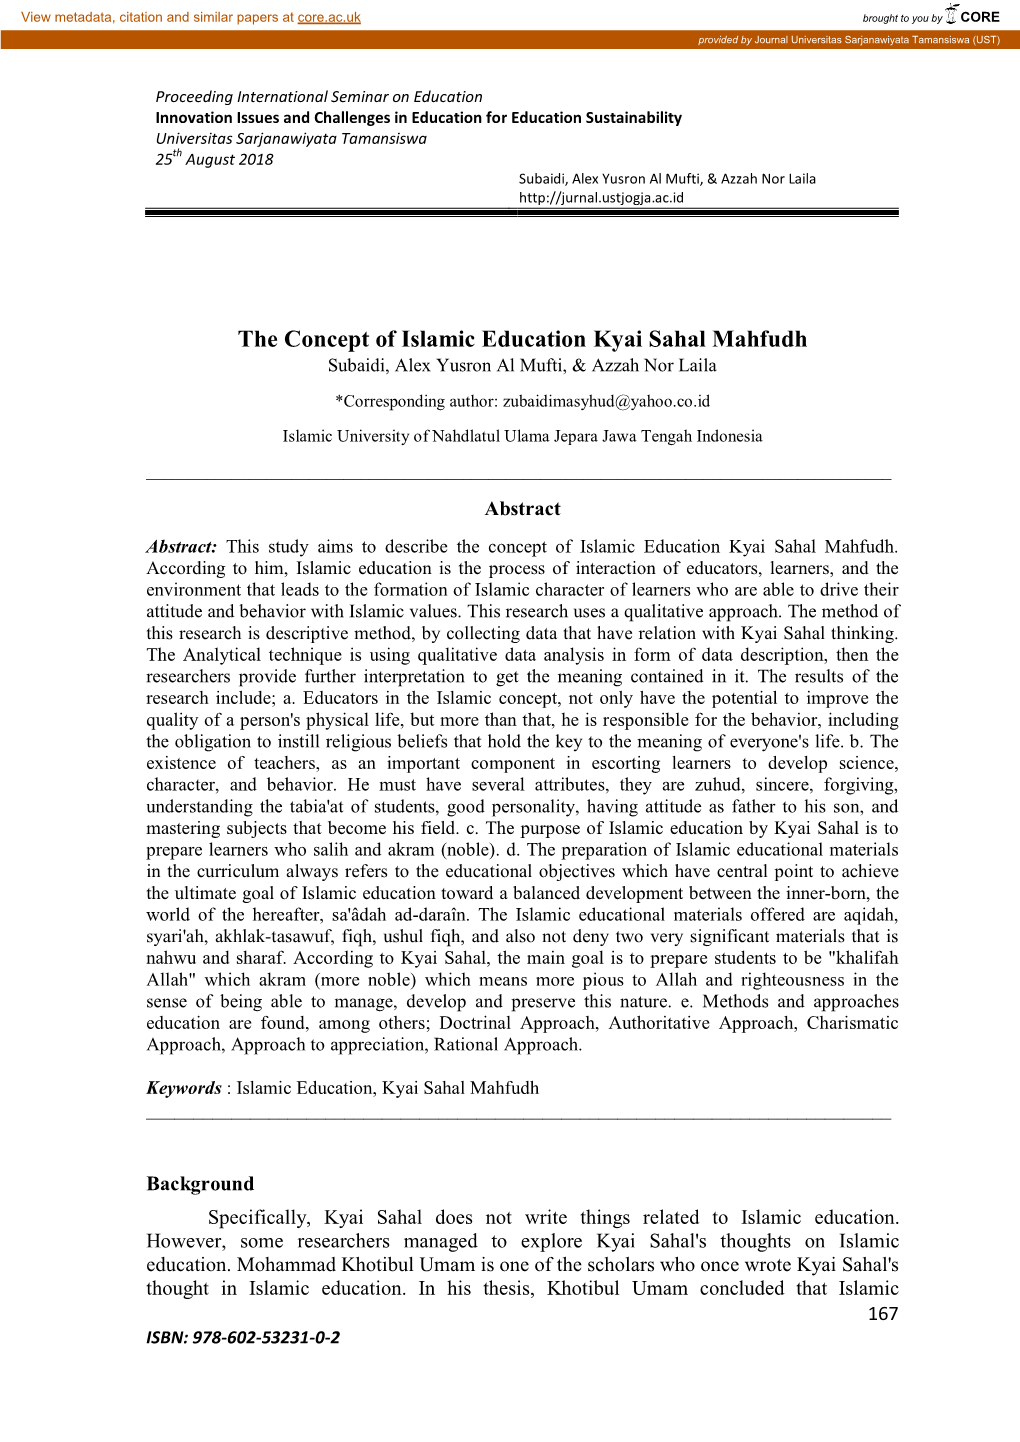 The Concept of Islamic Education Kyai Sahal Mahfudh Subaidi, Alex Yusron Al Mufti, & Azzah Nor Laila